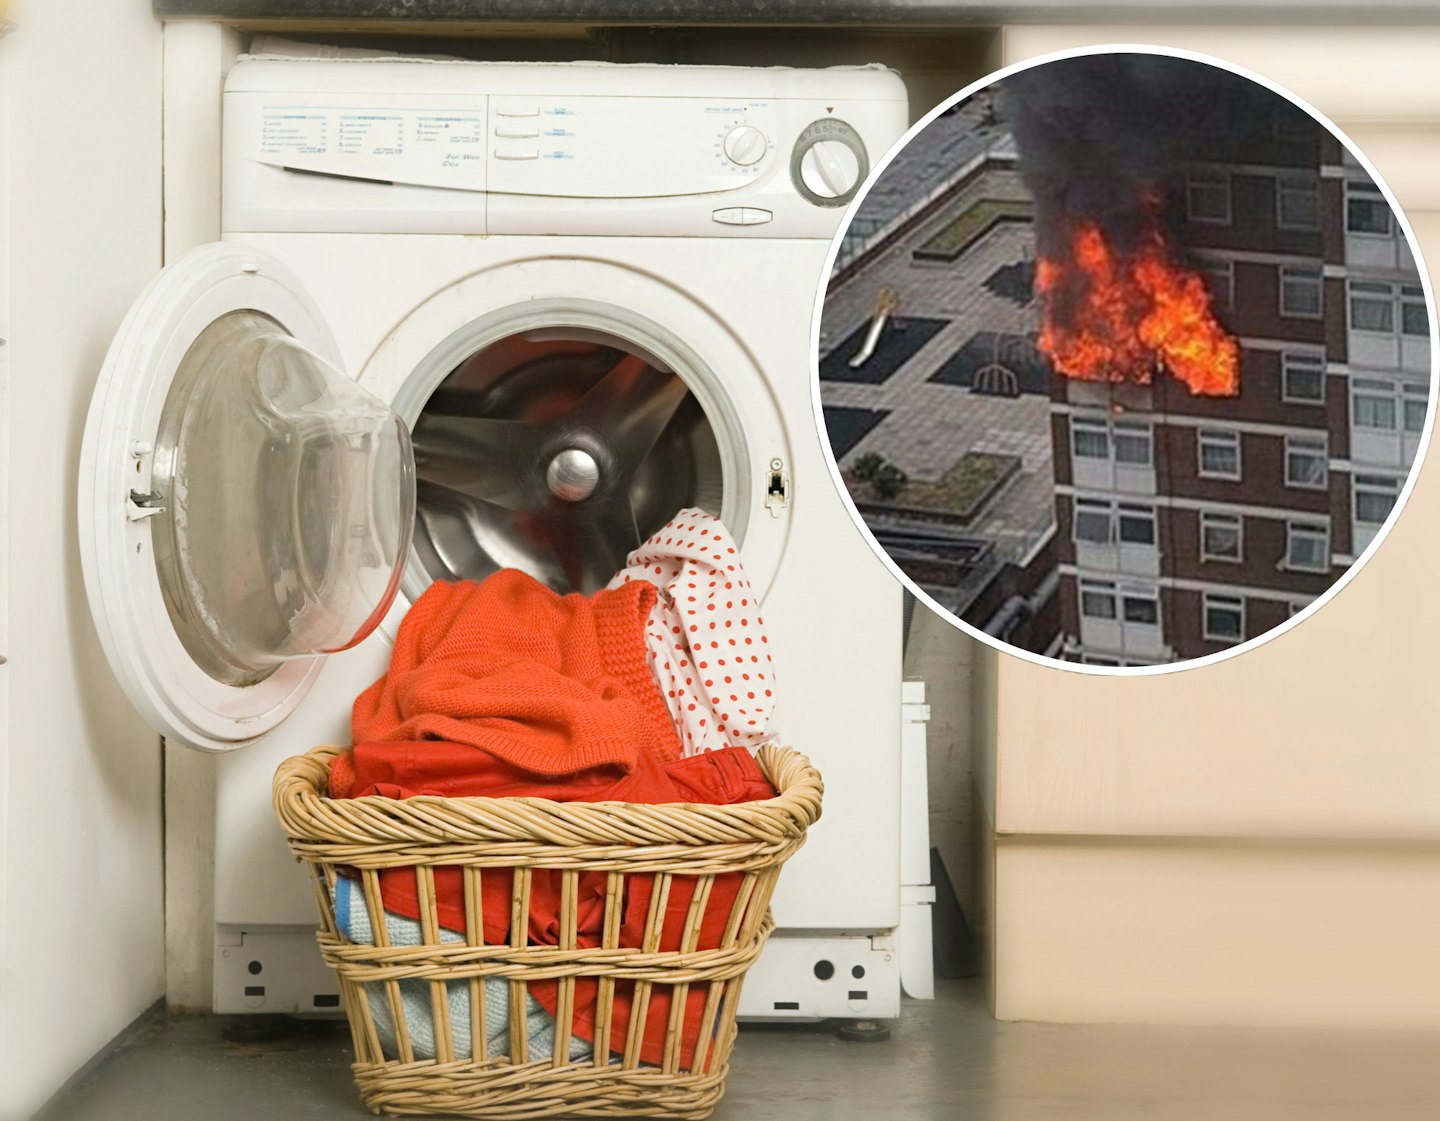 warning-hotpoint-indesit-tumble-dryer-unplug-fire-hazard-safety-family3